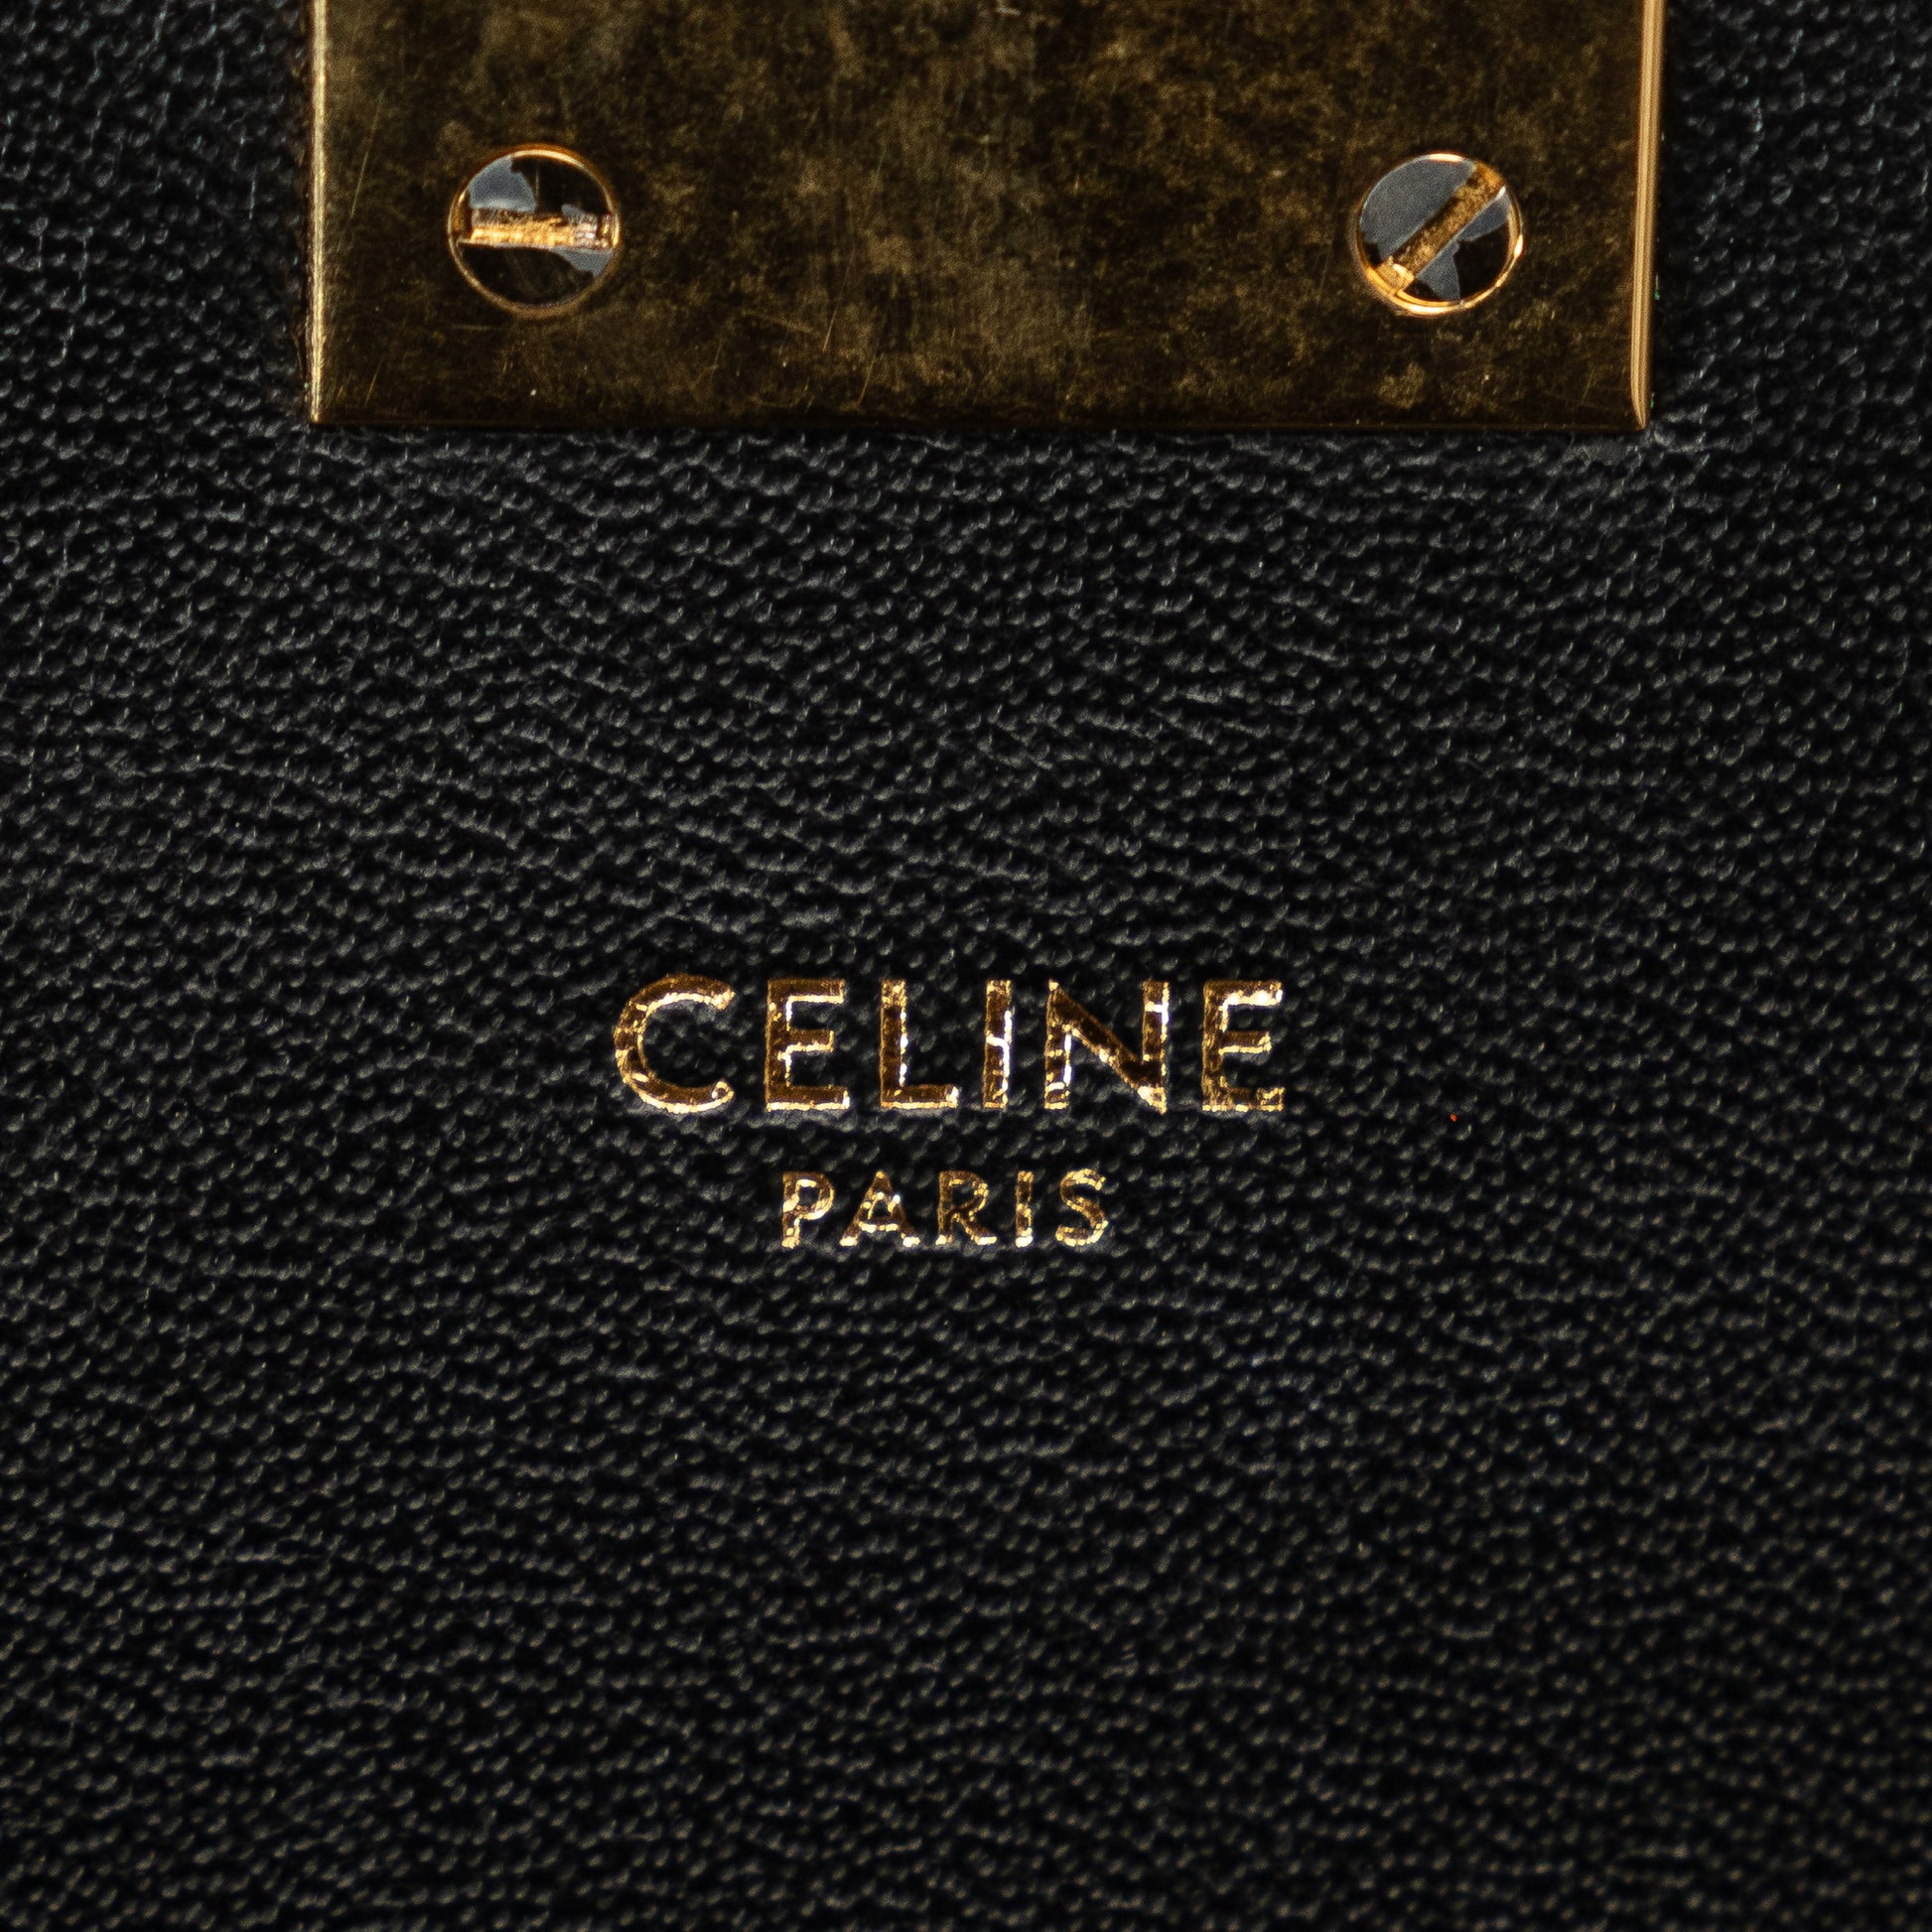 Small C Striped Leather Bag Black - Gaby Paris